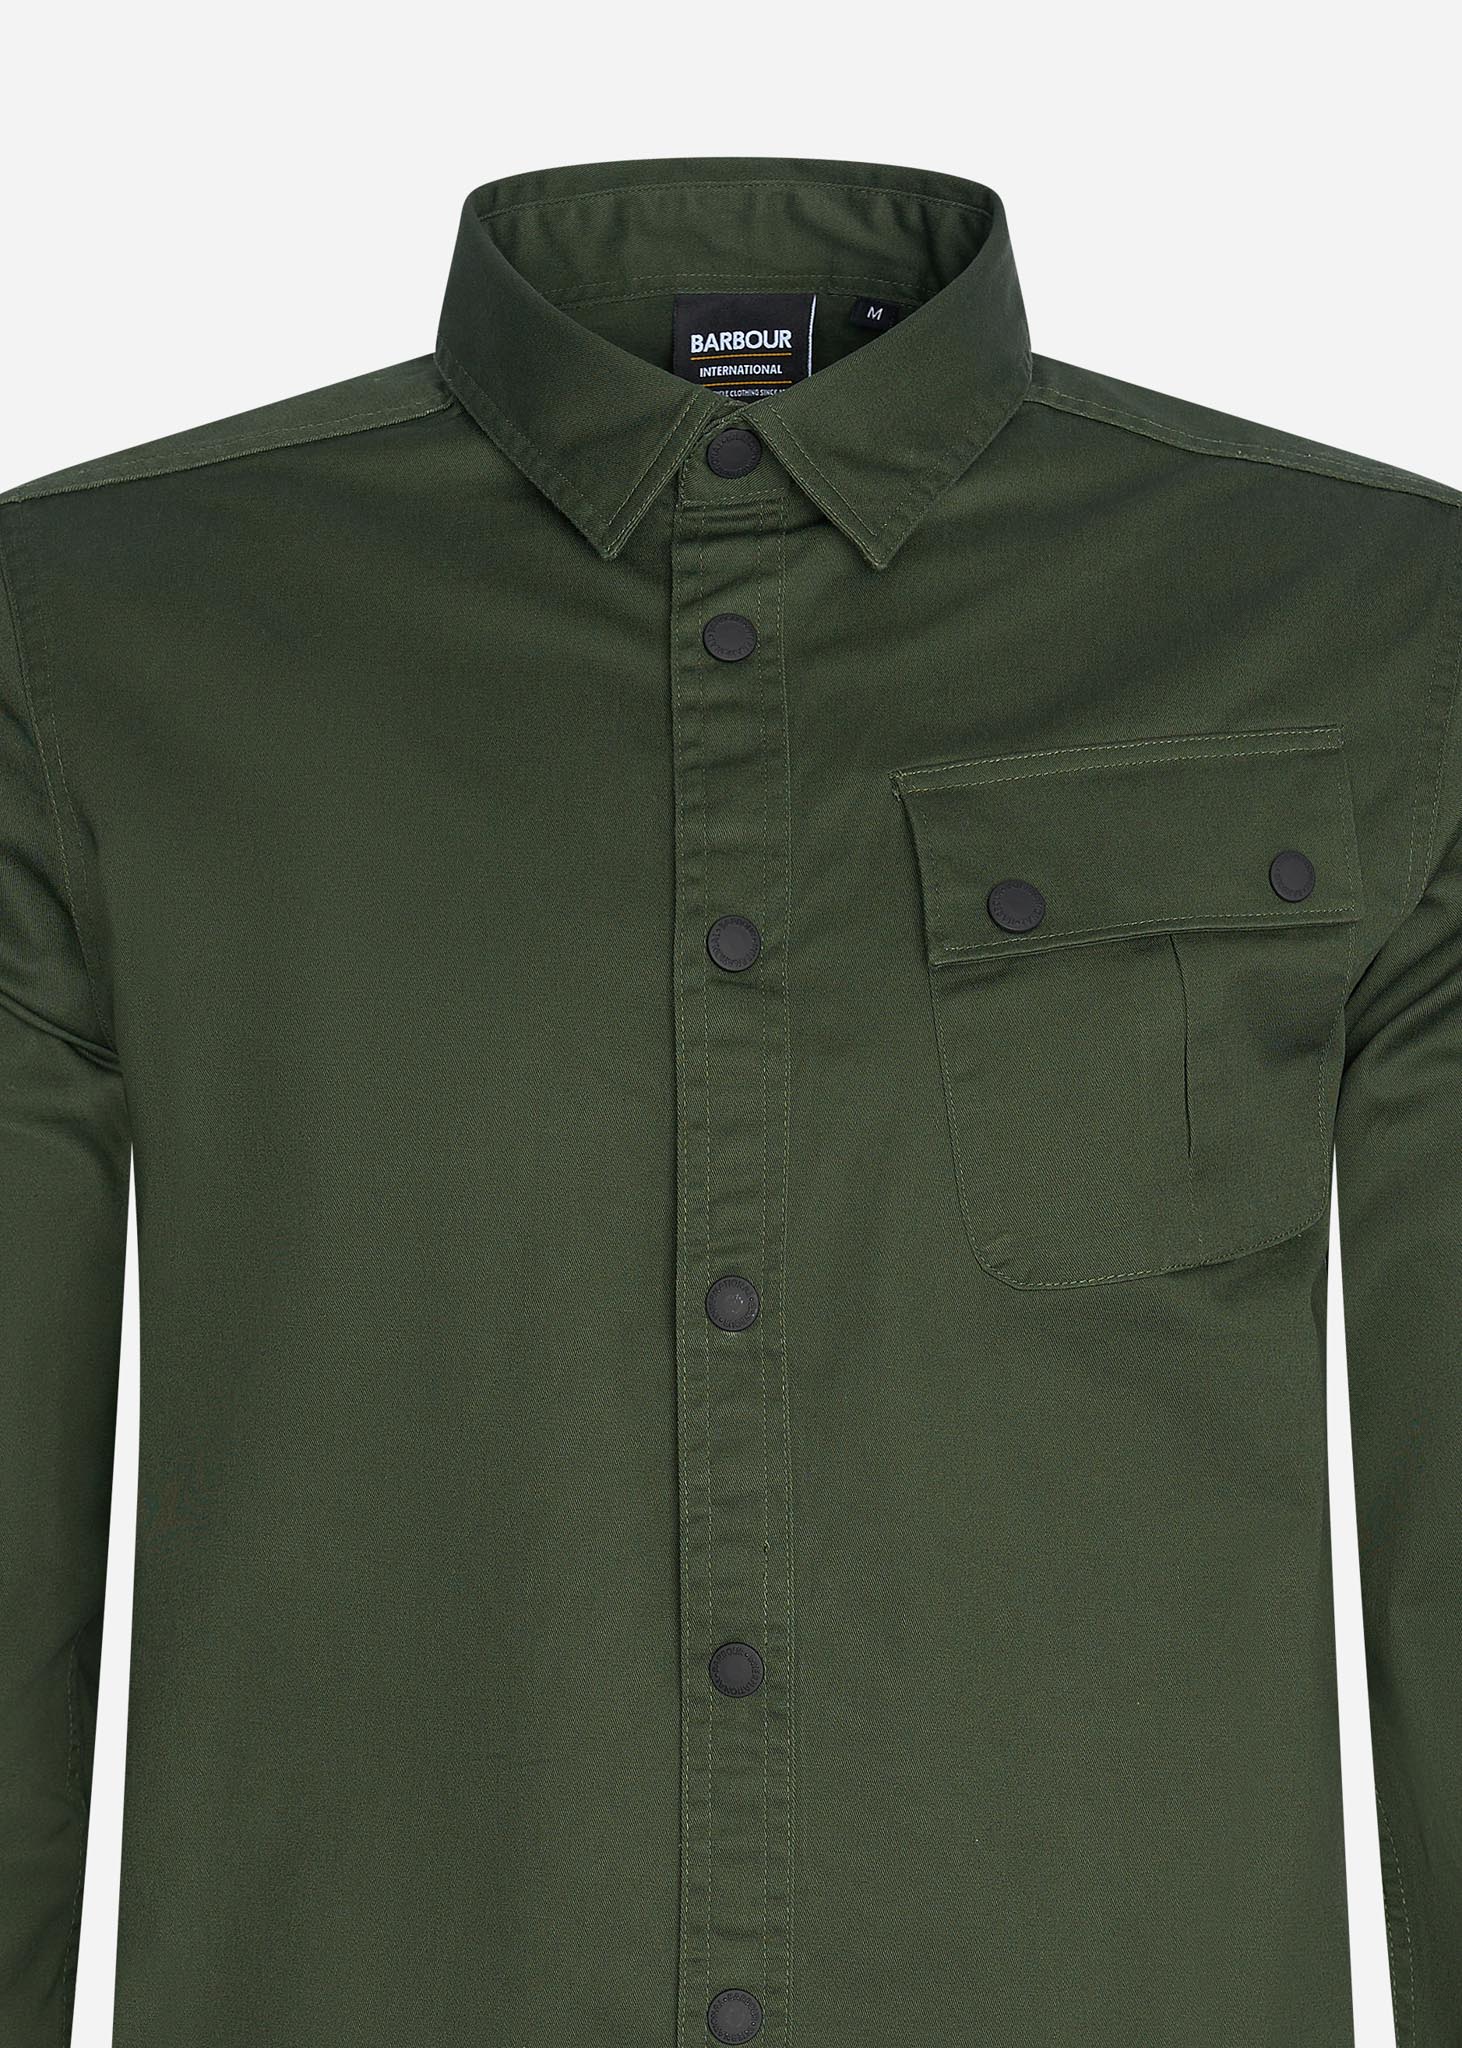 Barbour International overshirt green